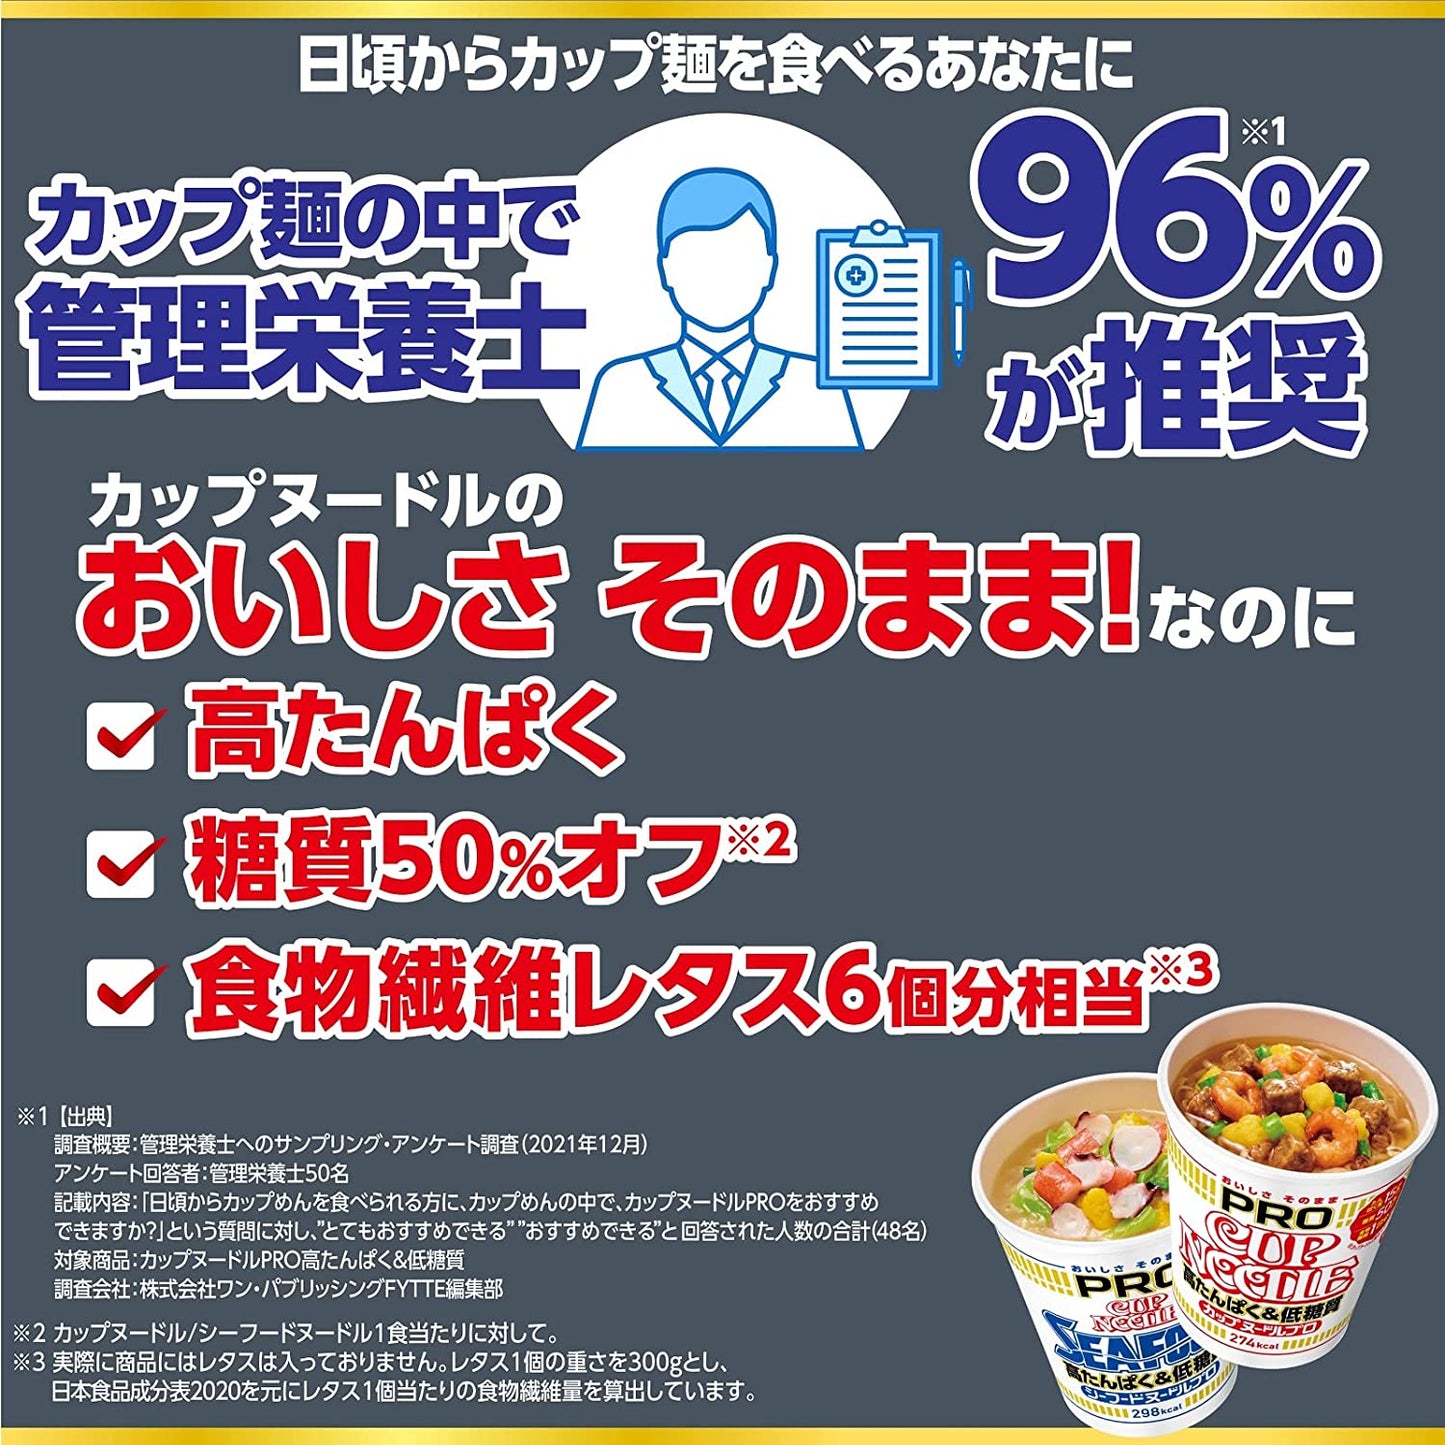 NISSIN CUP NOODLE Ramen Soy Sauce Low Carb PRO Protein Cup Food Soup Japan 74g